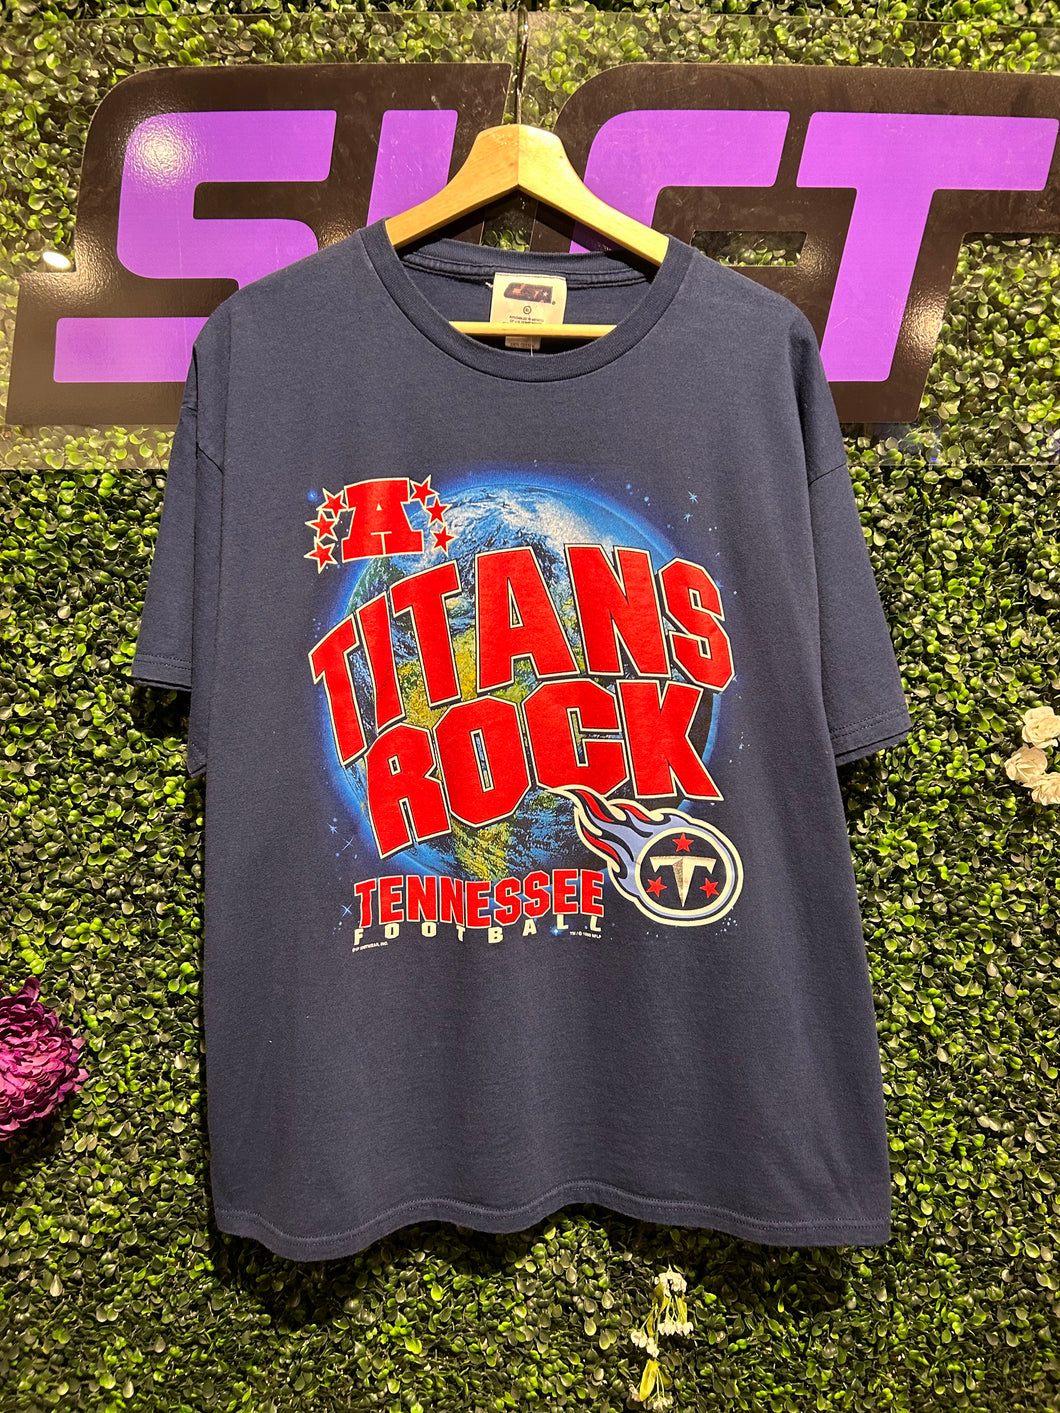 1999 Tennessee Titans ‘Titans Rock’ T-Shirt. Size XL